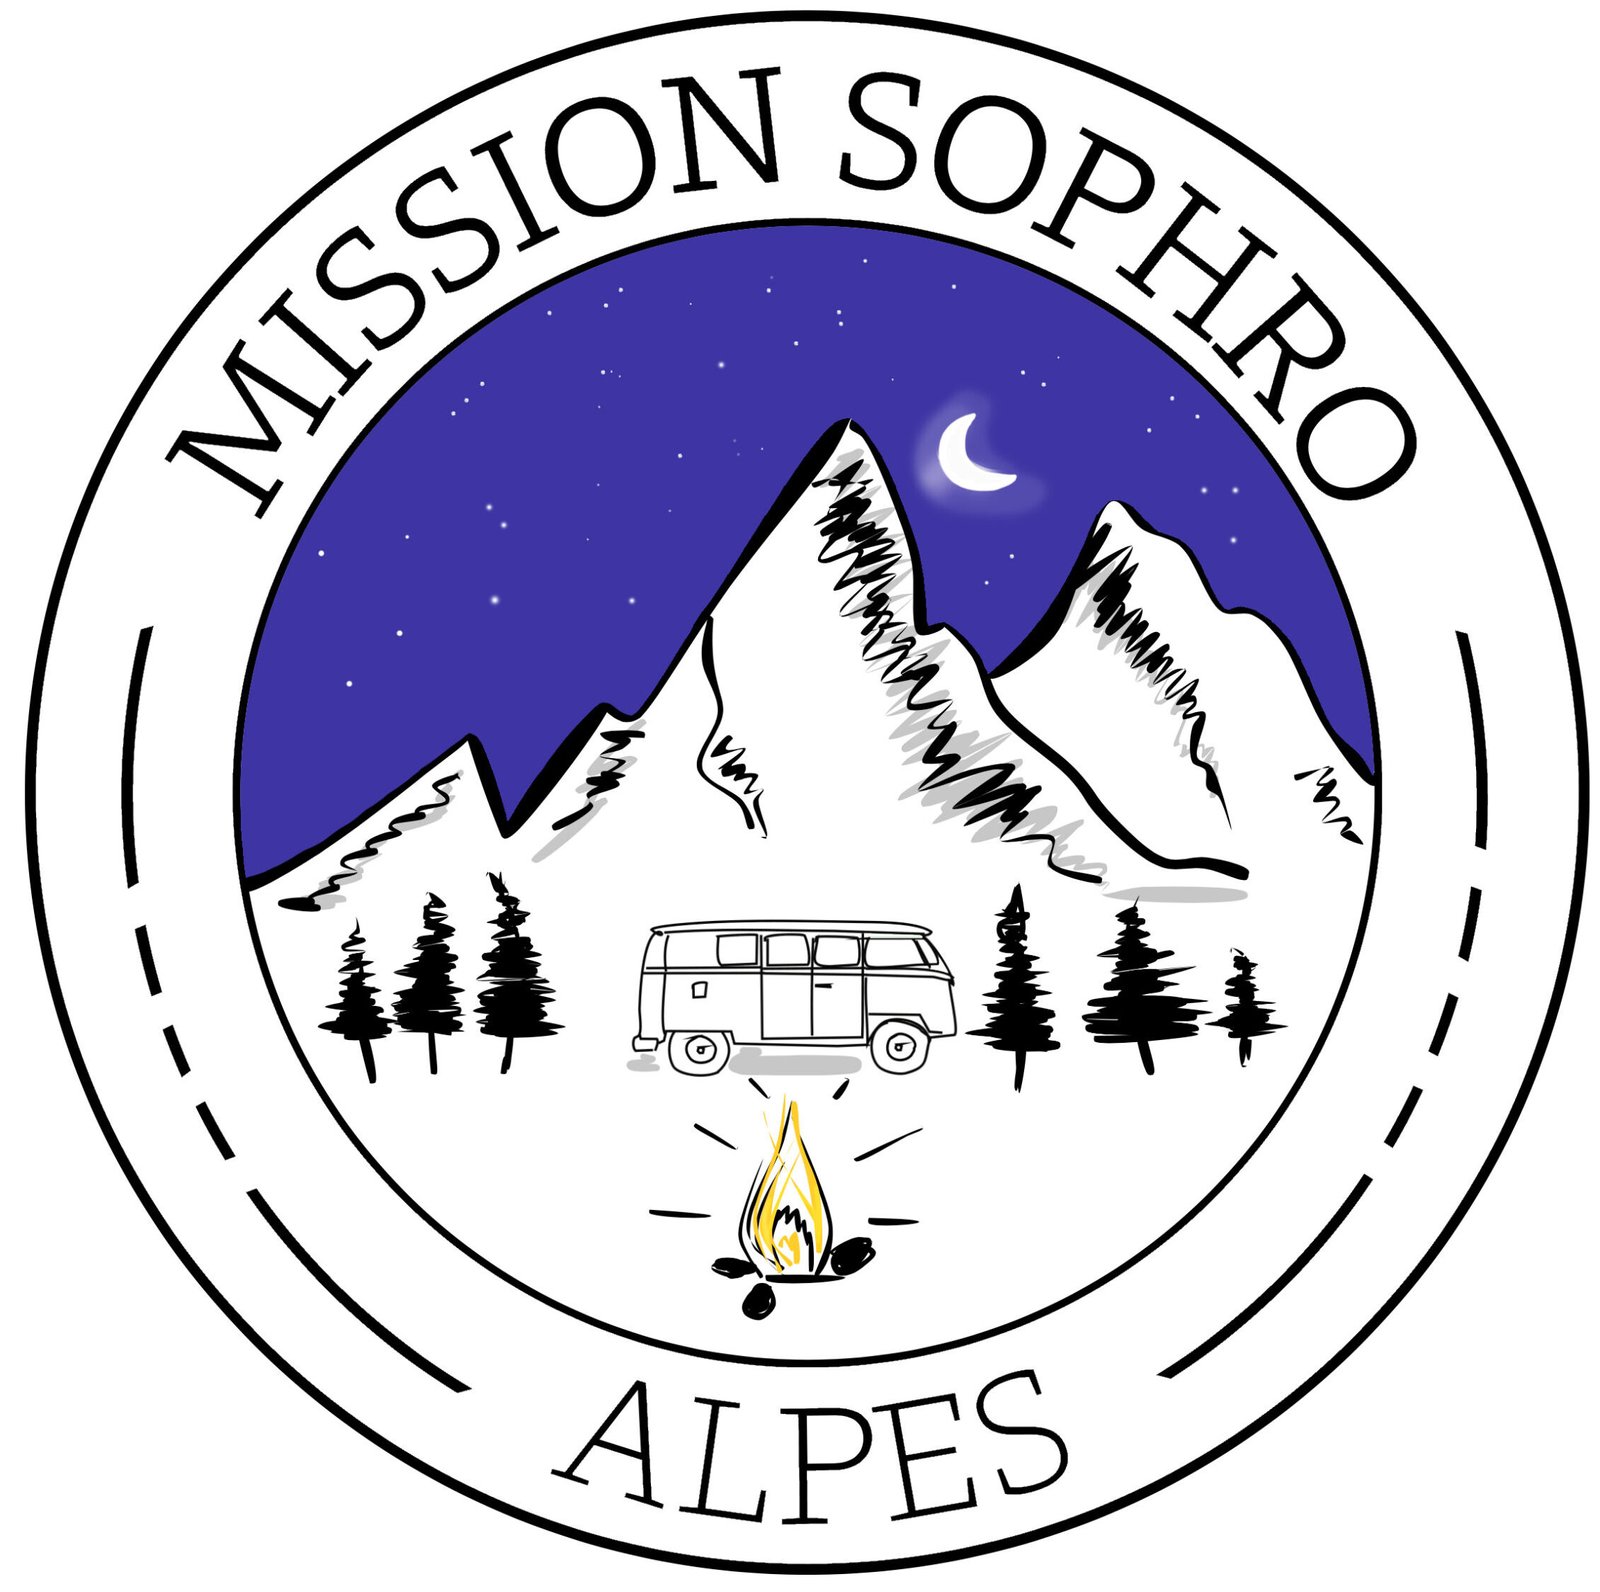 Mission Sophro